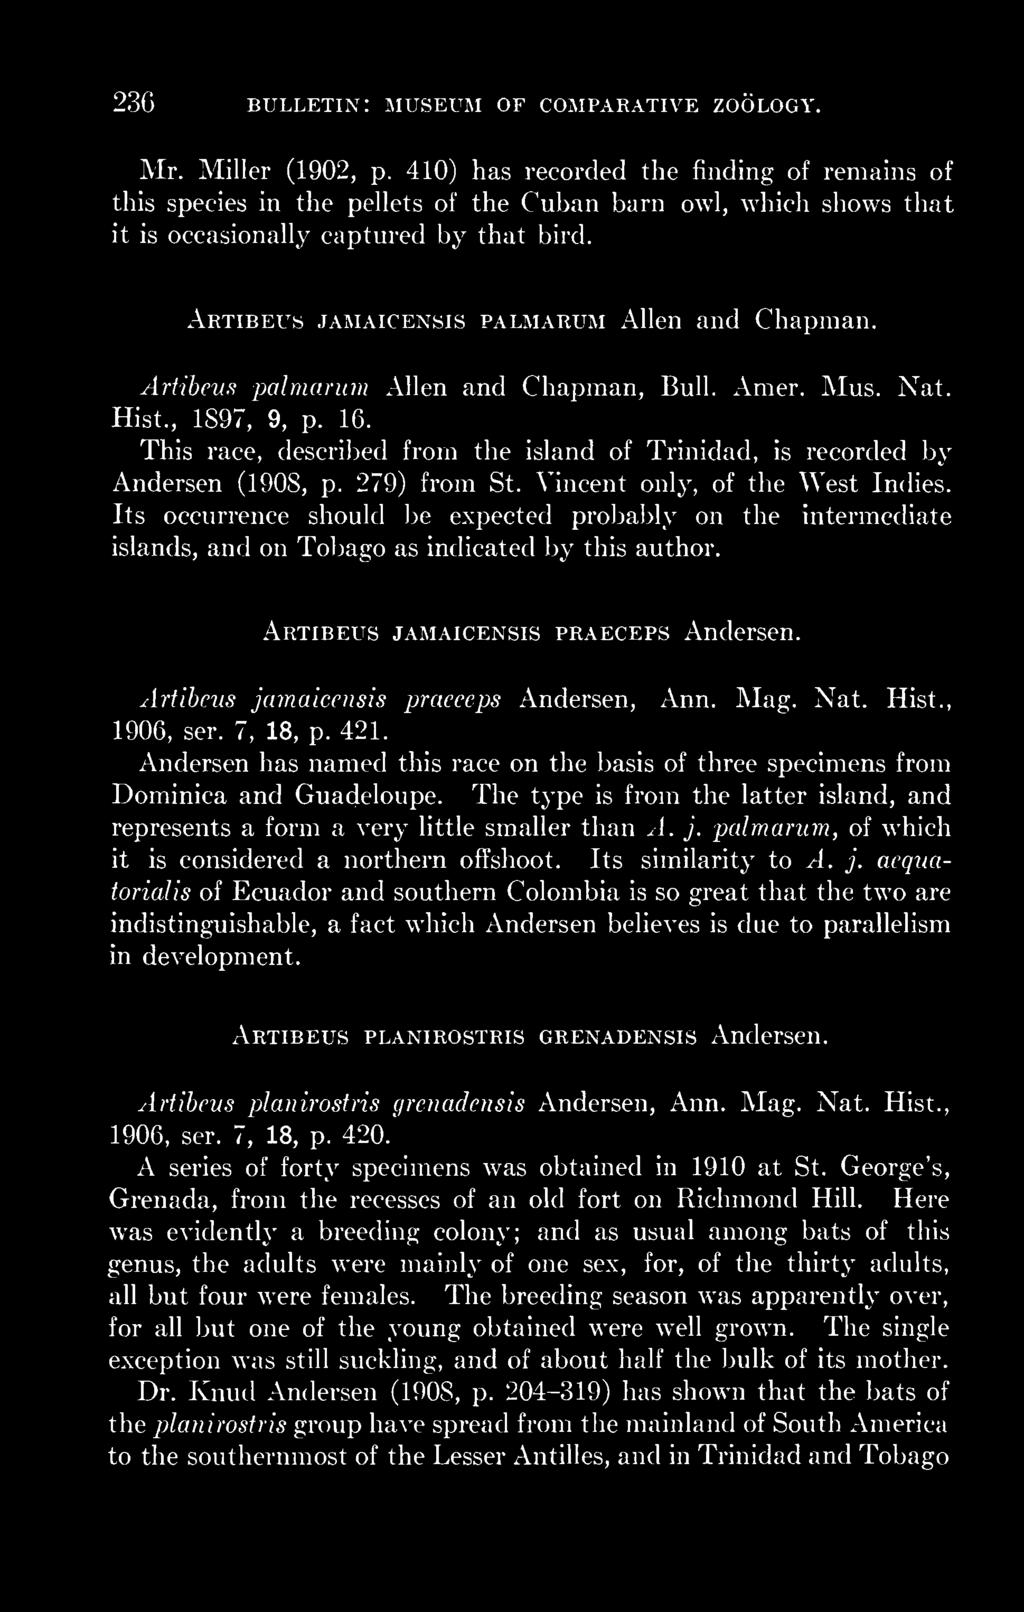 Artibeus jamaicensis palmarum Allen and Chapman. Artibeus palmarum Allen and Chapman, Bull. Amer. Mus. Nat. Hist., 1897, 9, p. 16.